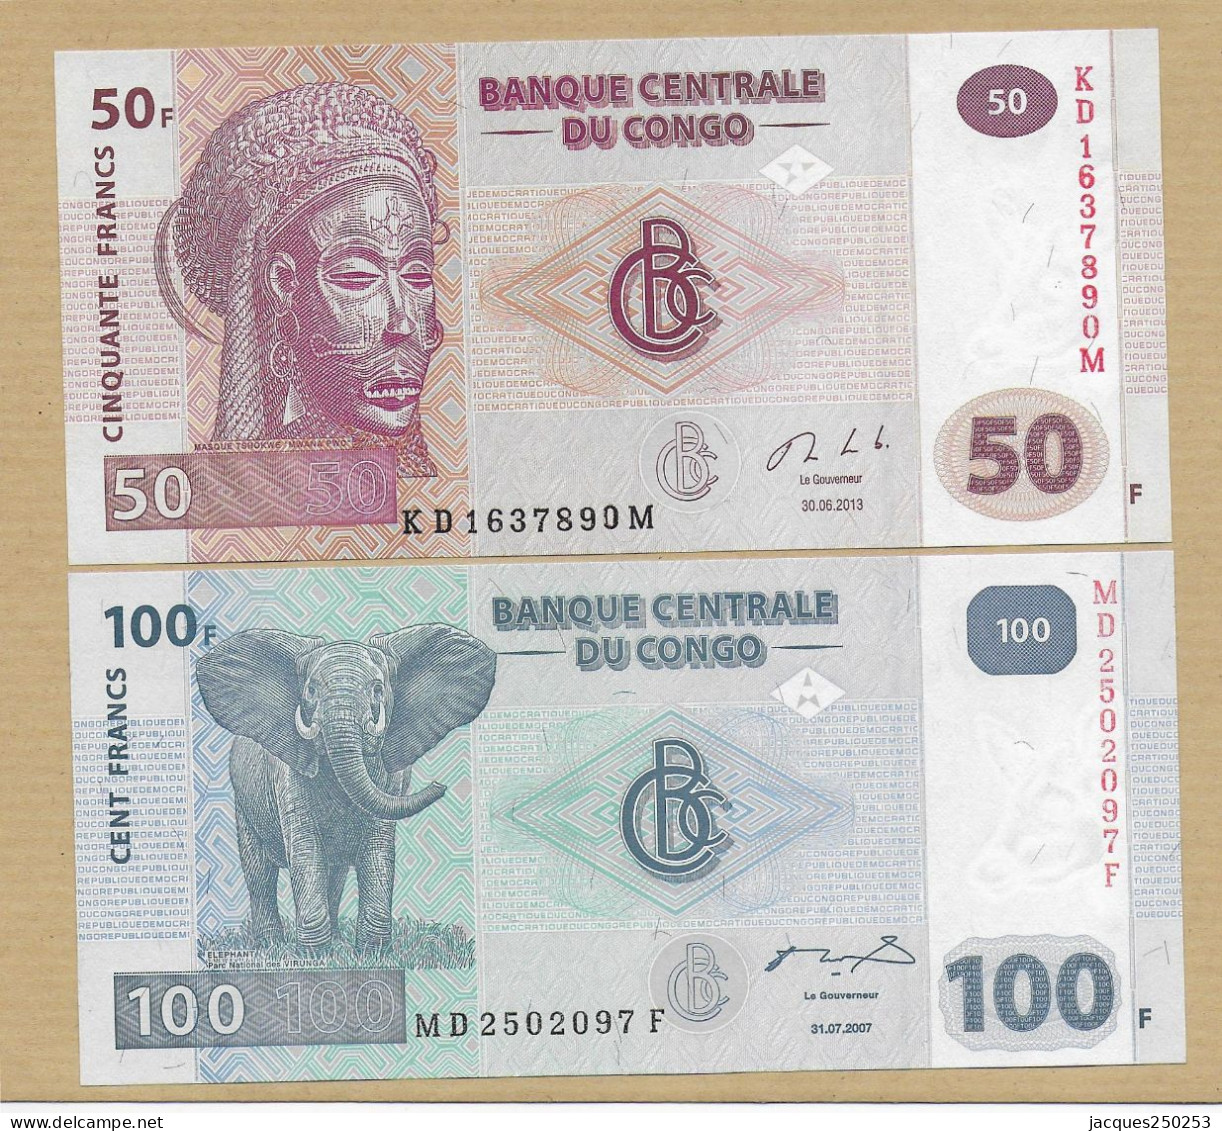 50 FRANCS 2013 ET 100 FRANCS 2007  NEUF - Republic Of Congo (Congo-Brazzaville)